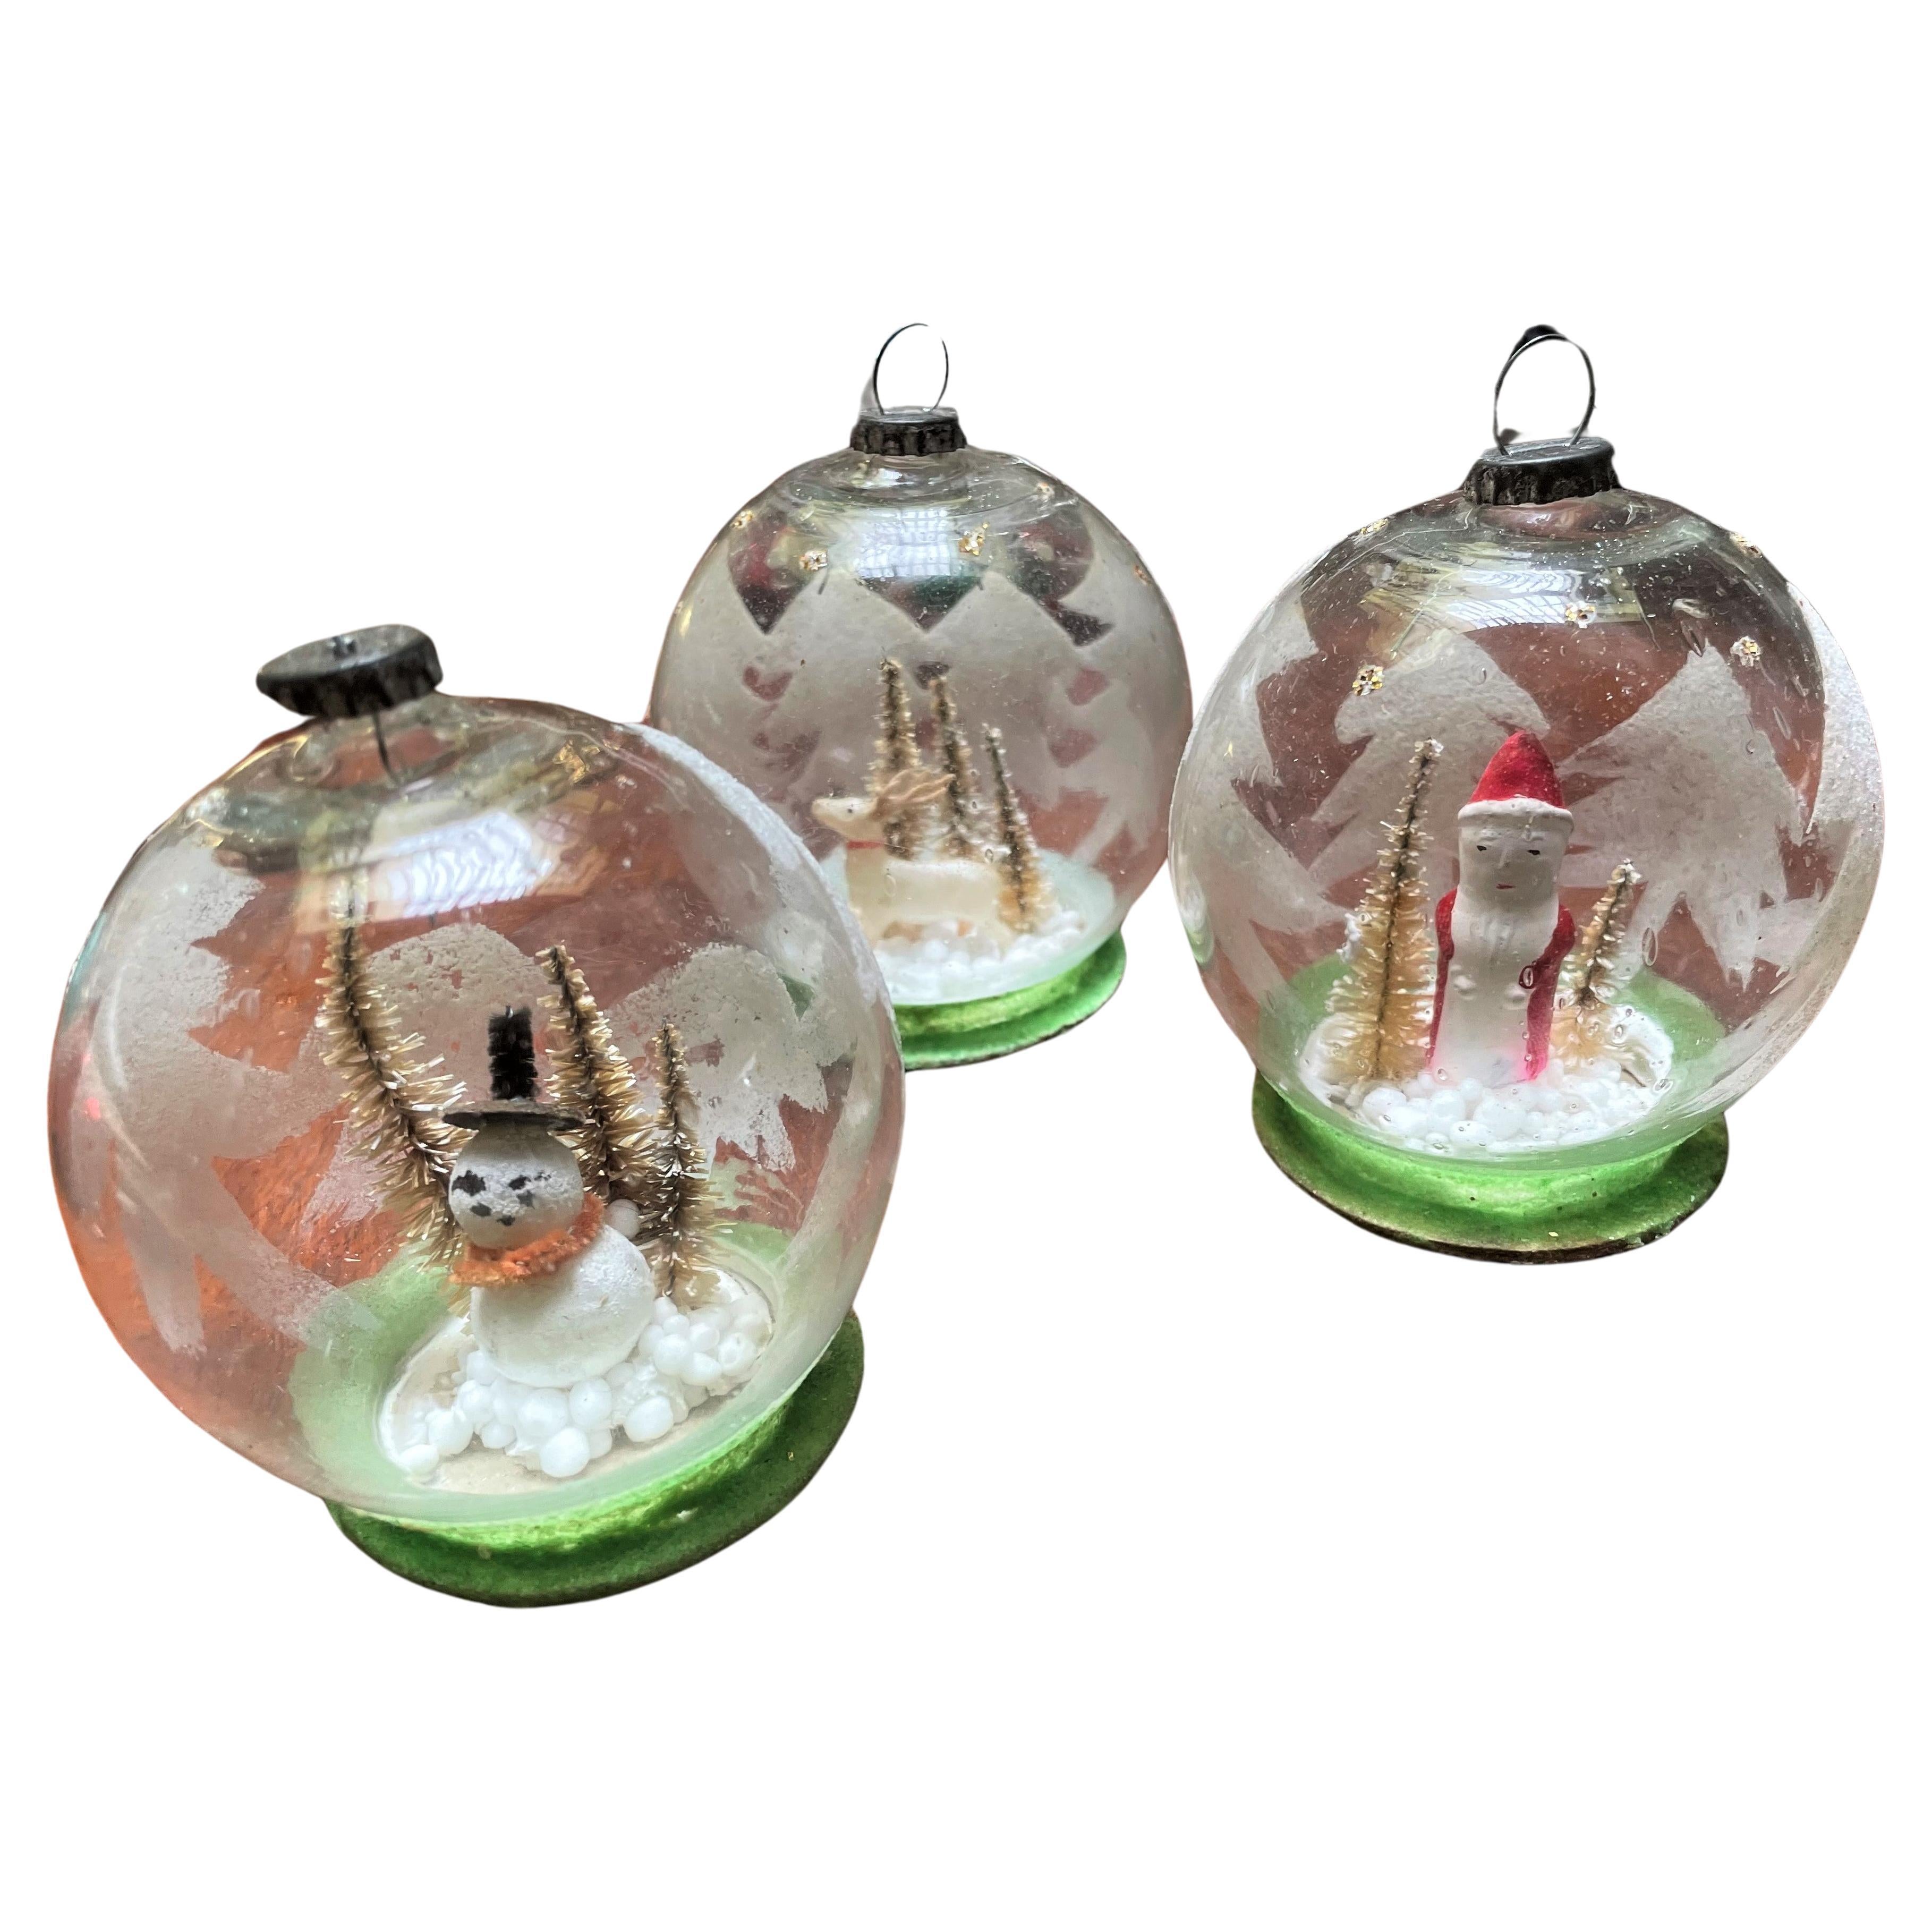 Blown Glass Globe Ornament w/ Diorama Winter Scenes Santa Snowman Reindeer Trees